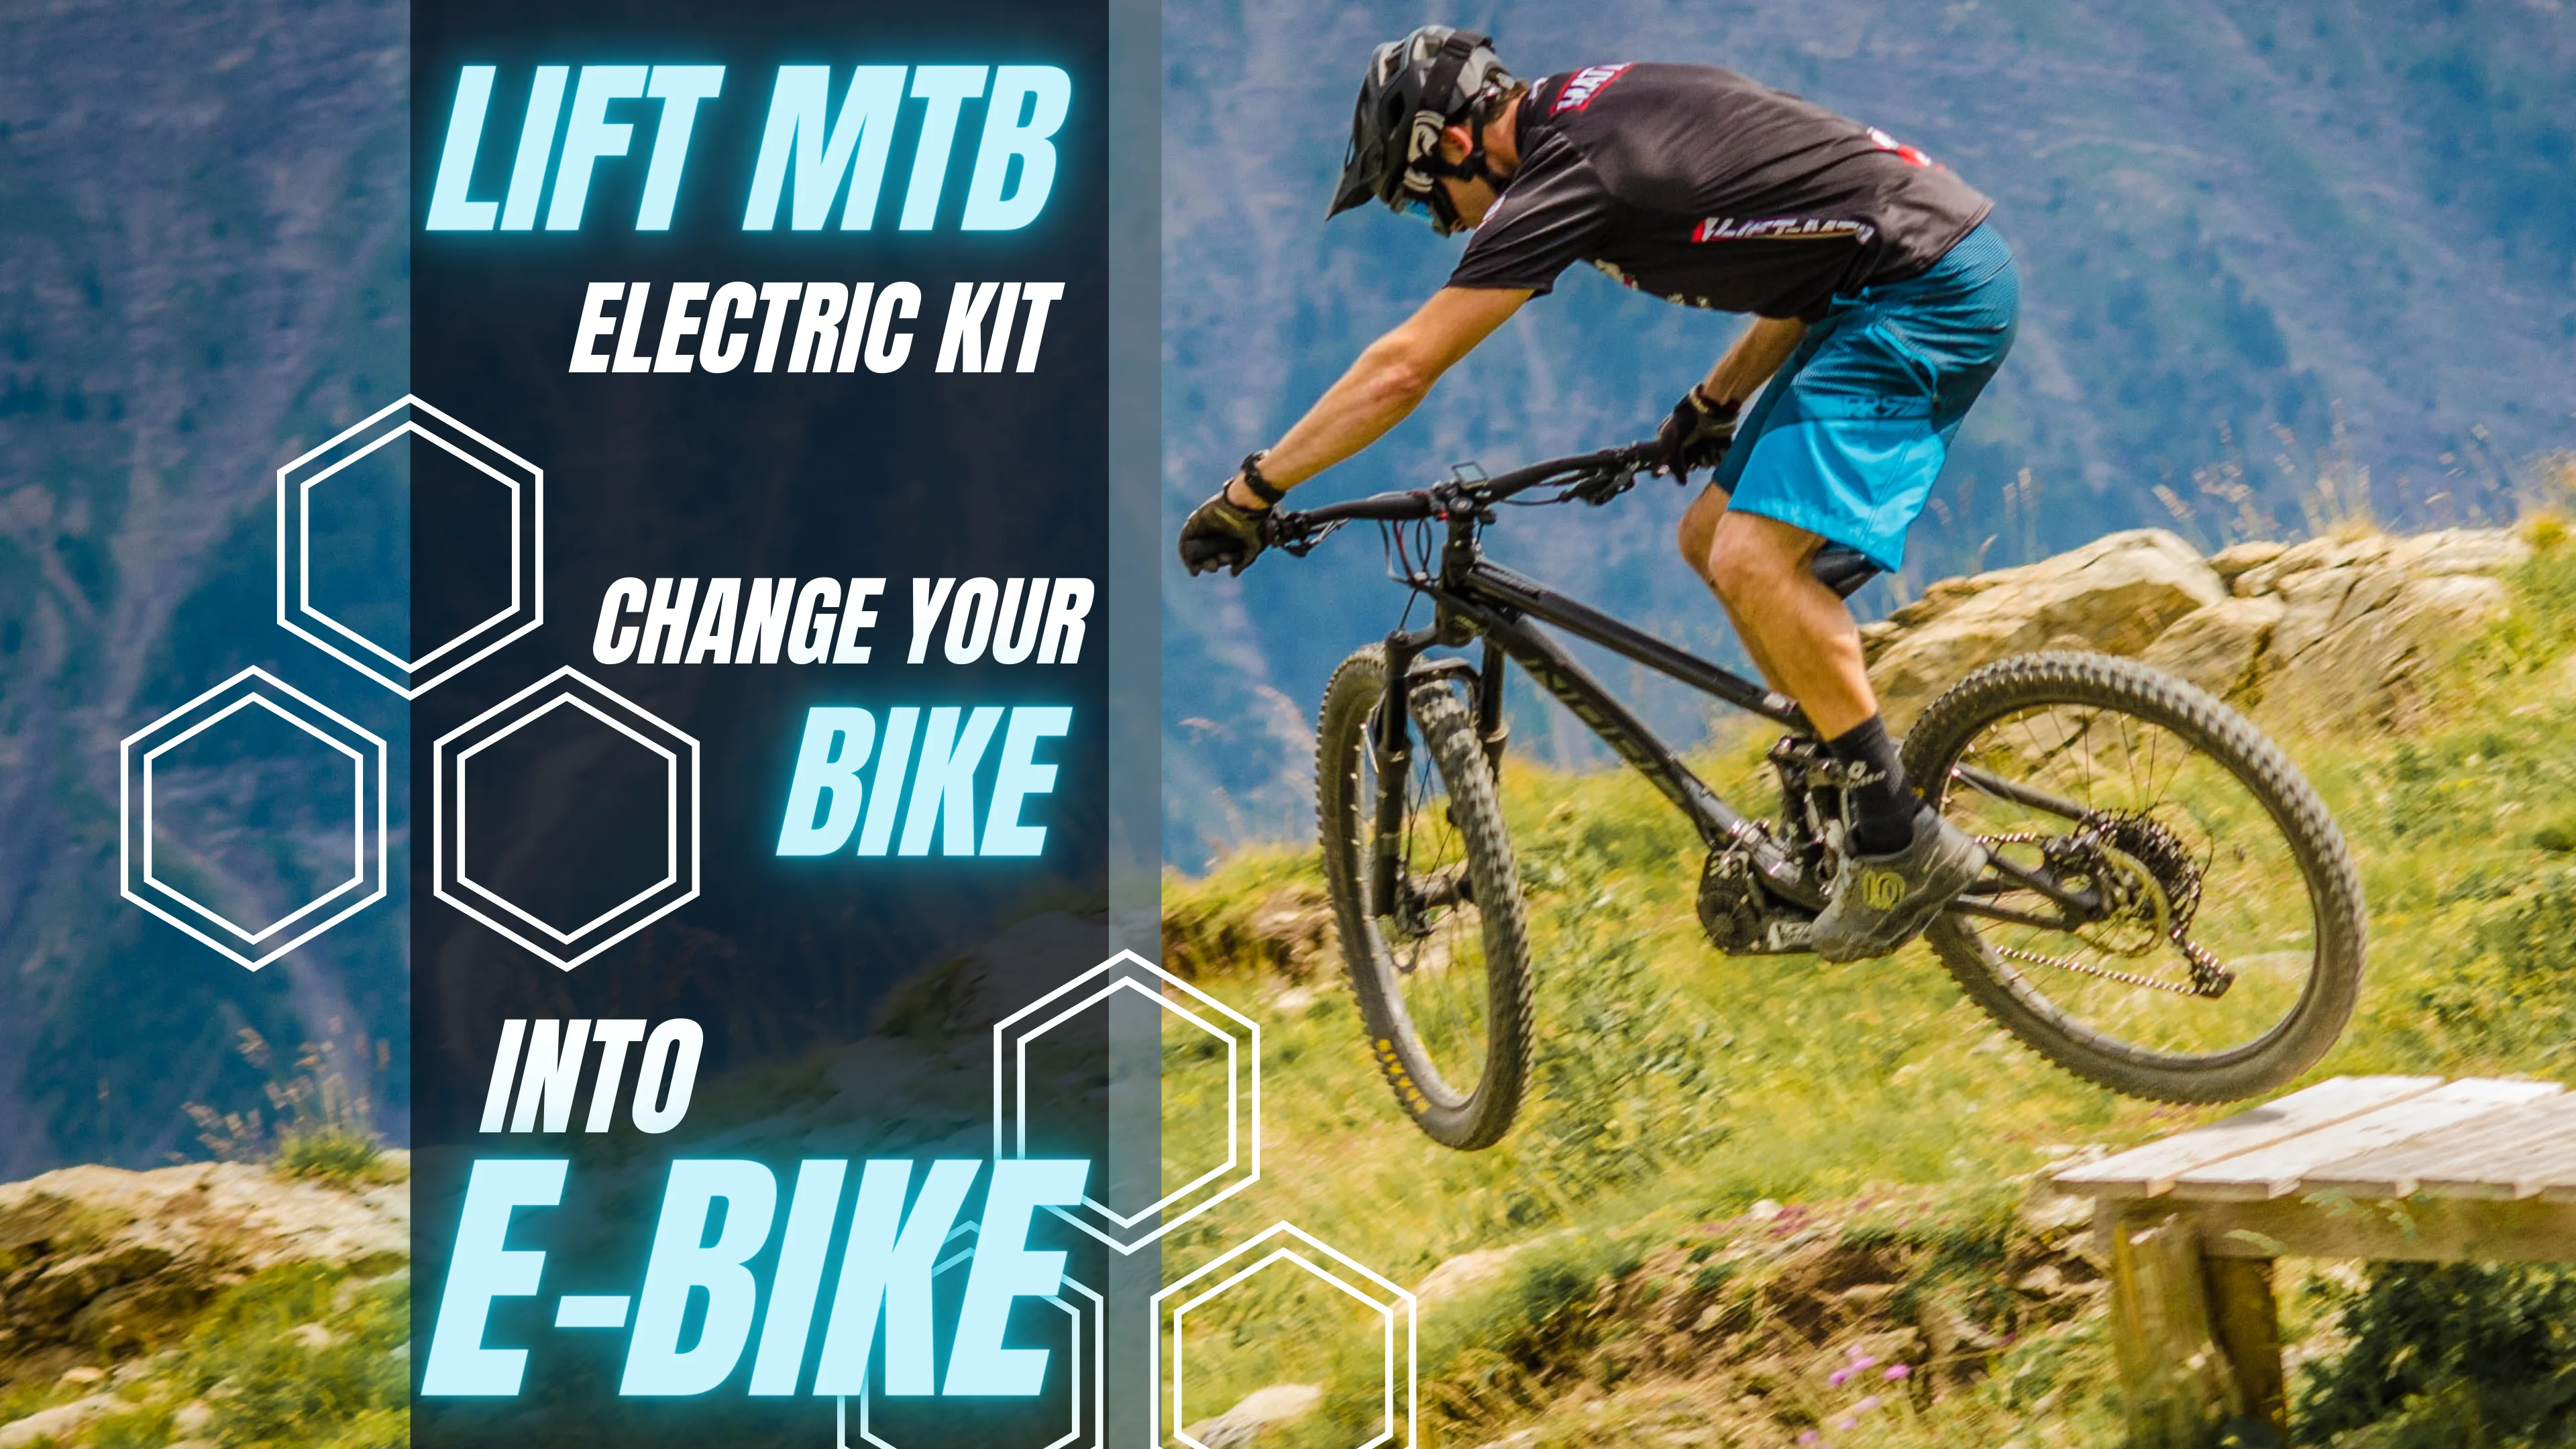 LIFT-MTB - Transformer son vélo en vélo électrique